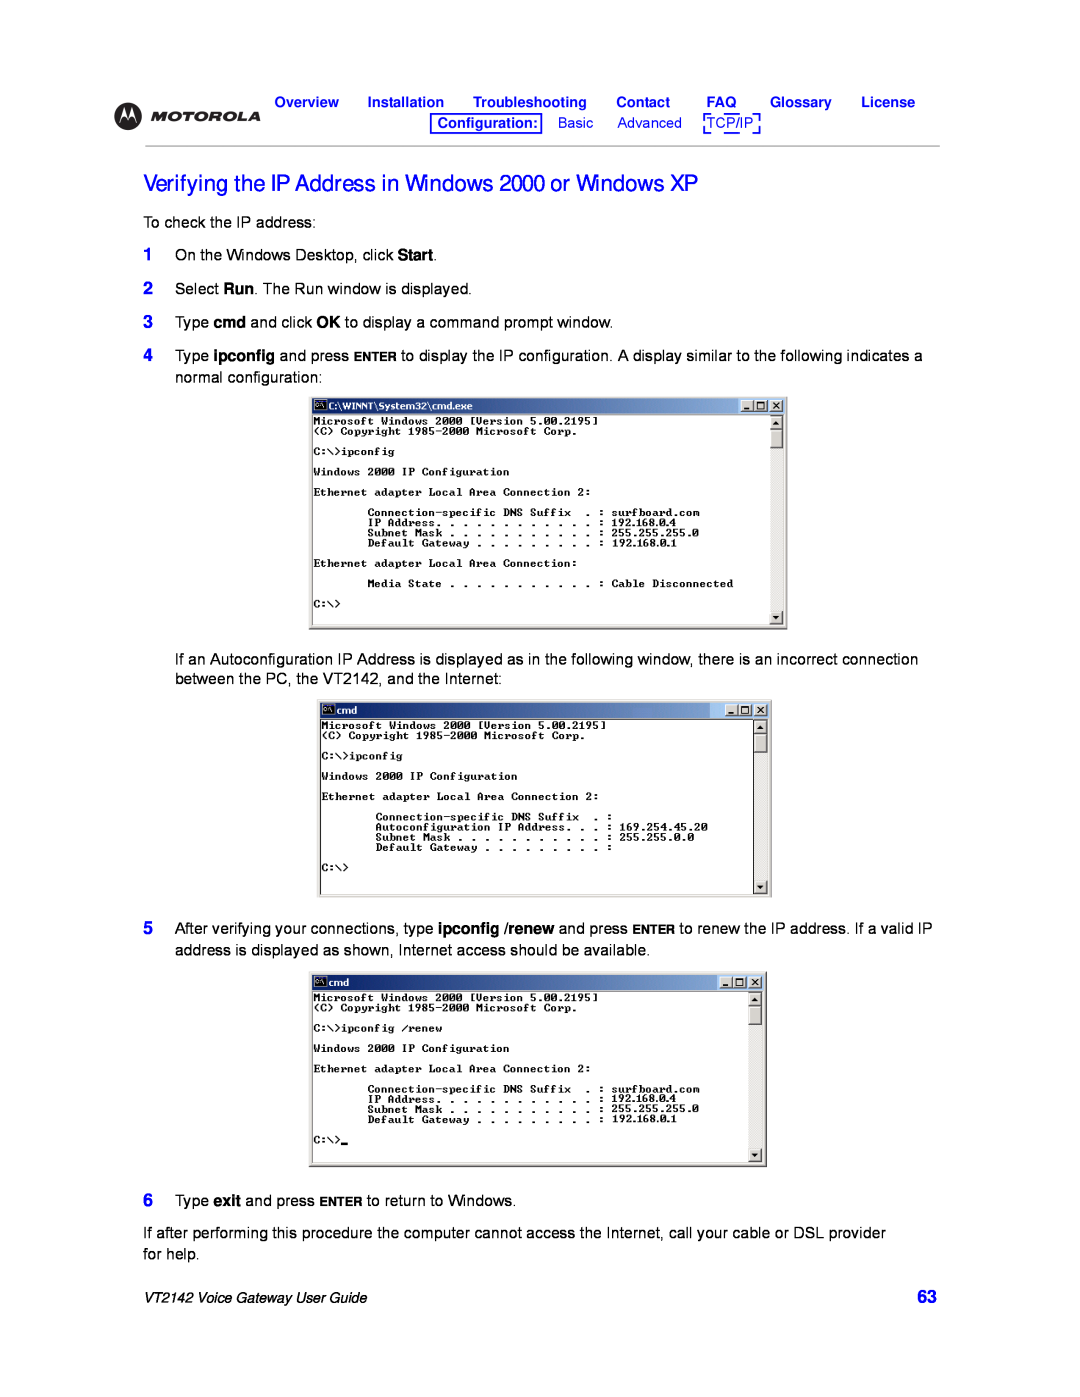 Motorola VT2142 manual Verifying the IP Address in Windows 2000 or Windows XP 